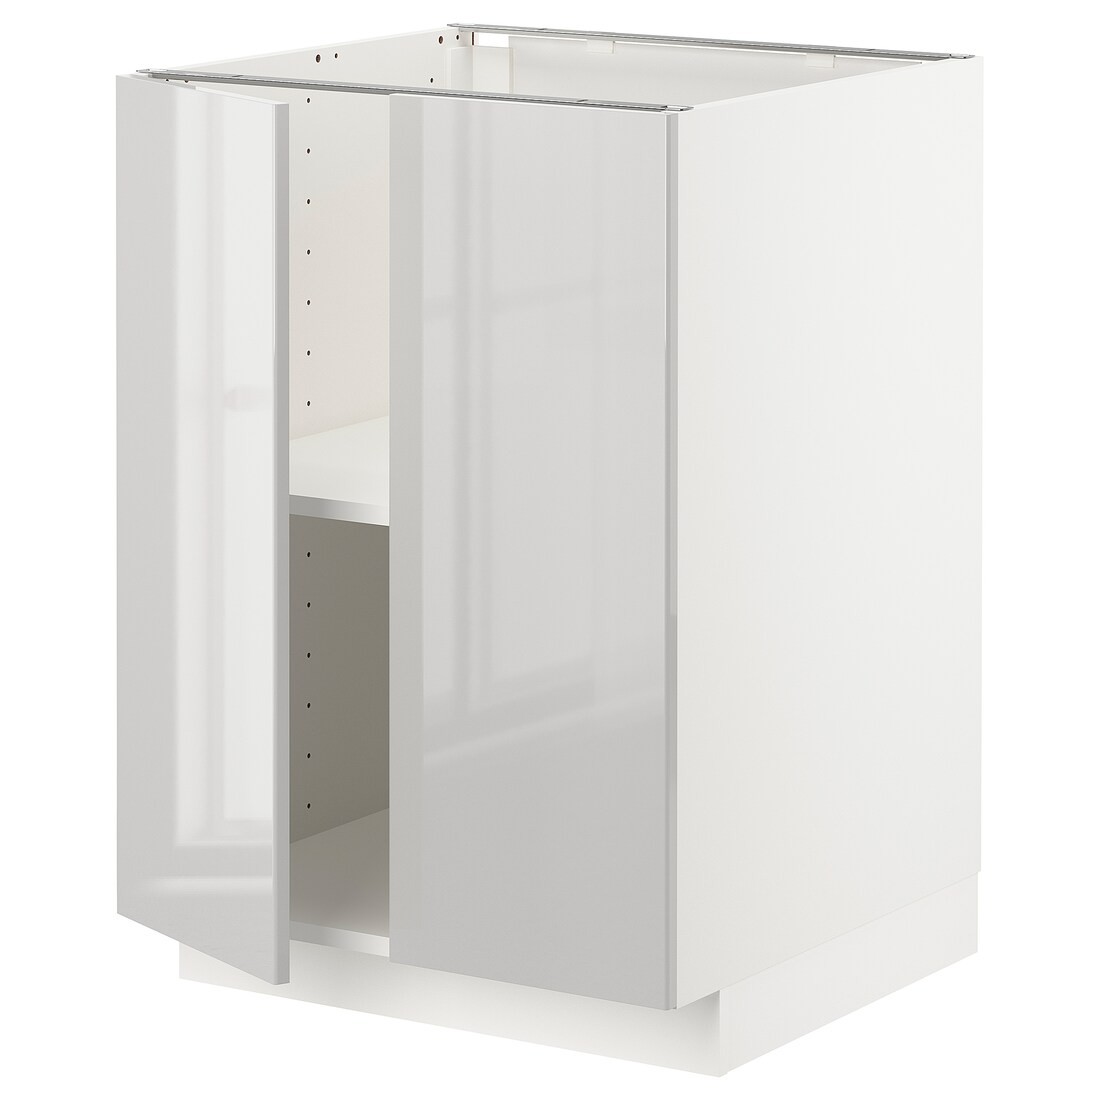 IKEA METOD МЕТОД Напол шкаф с полками / 2 двери, белый / Ringhult светло-серый, 60x60 см 99463987 | 994.639.87